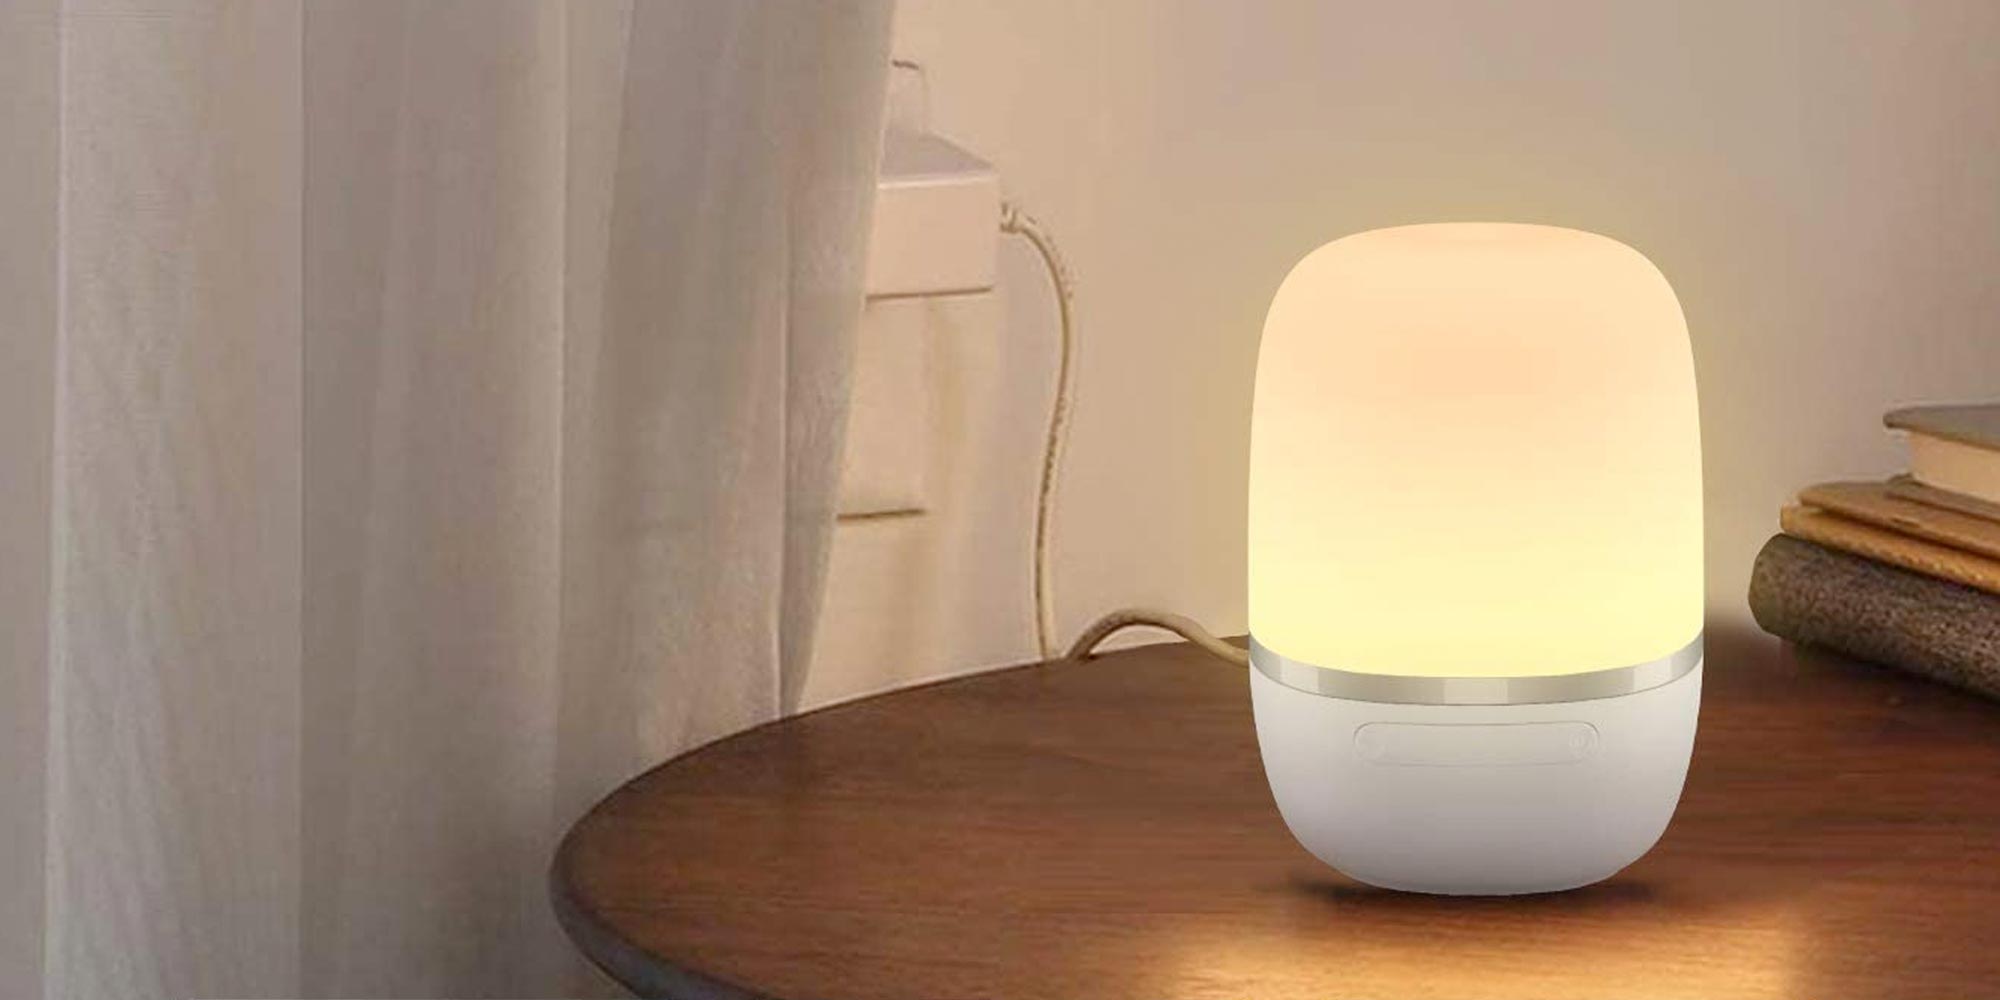 HomeKit adorns meross' latest smart table lamp [Deal] 9to5Toys